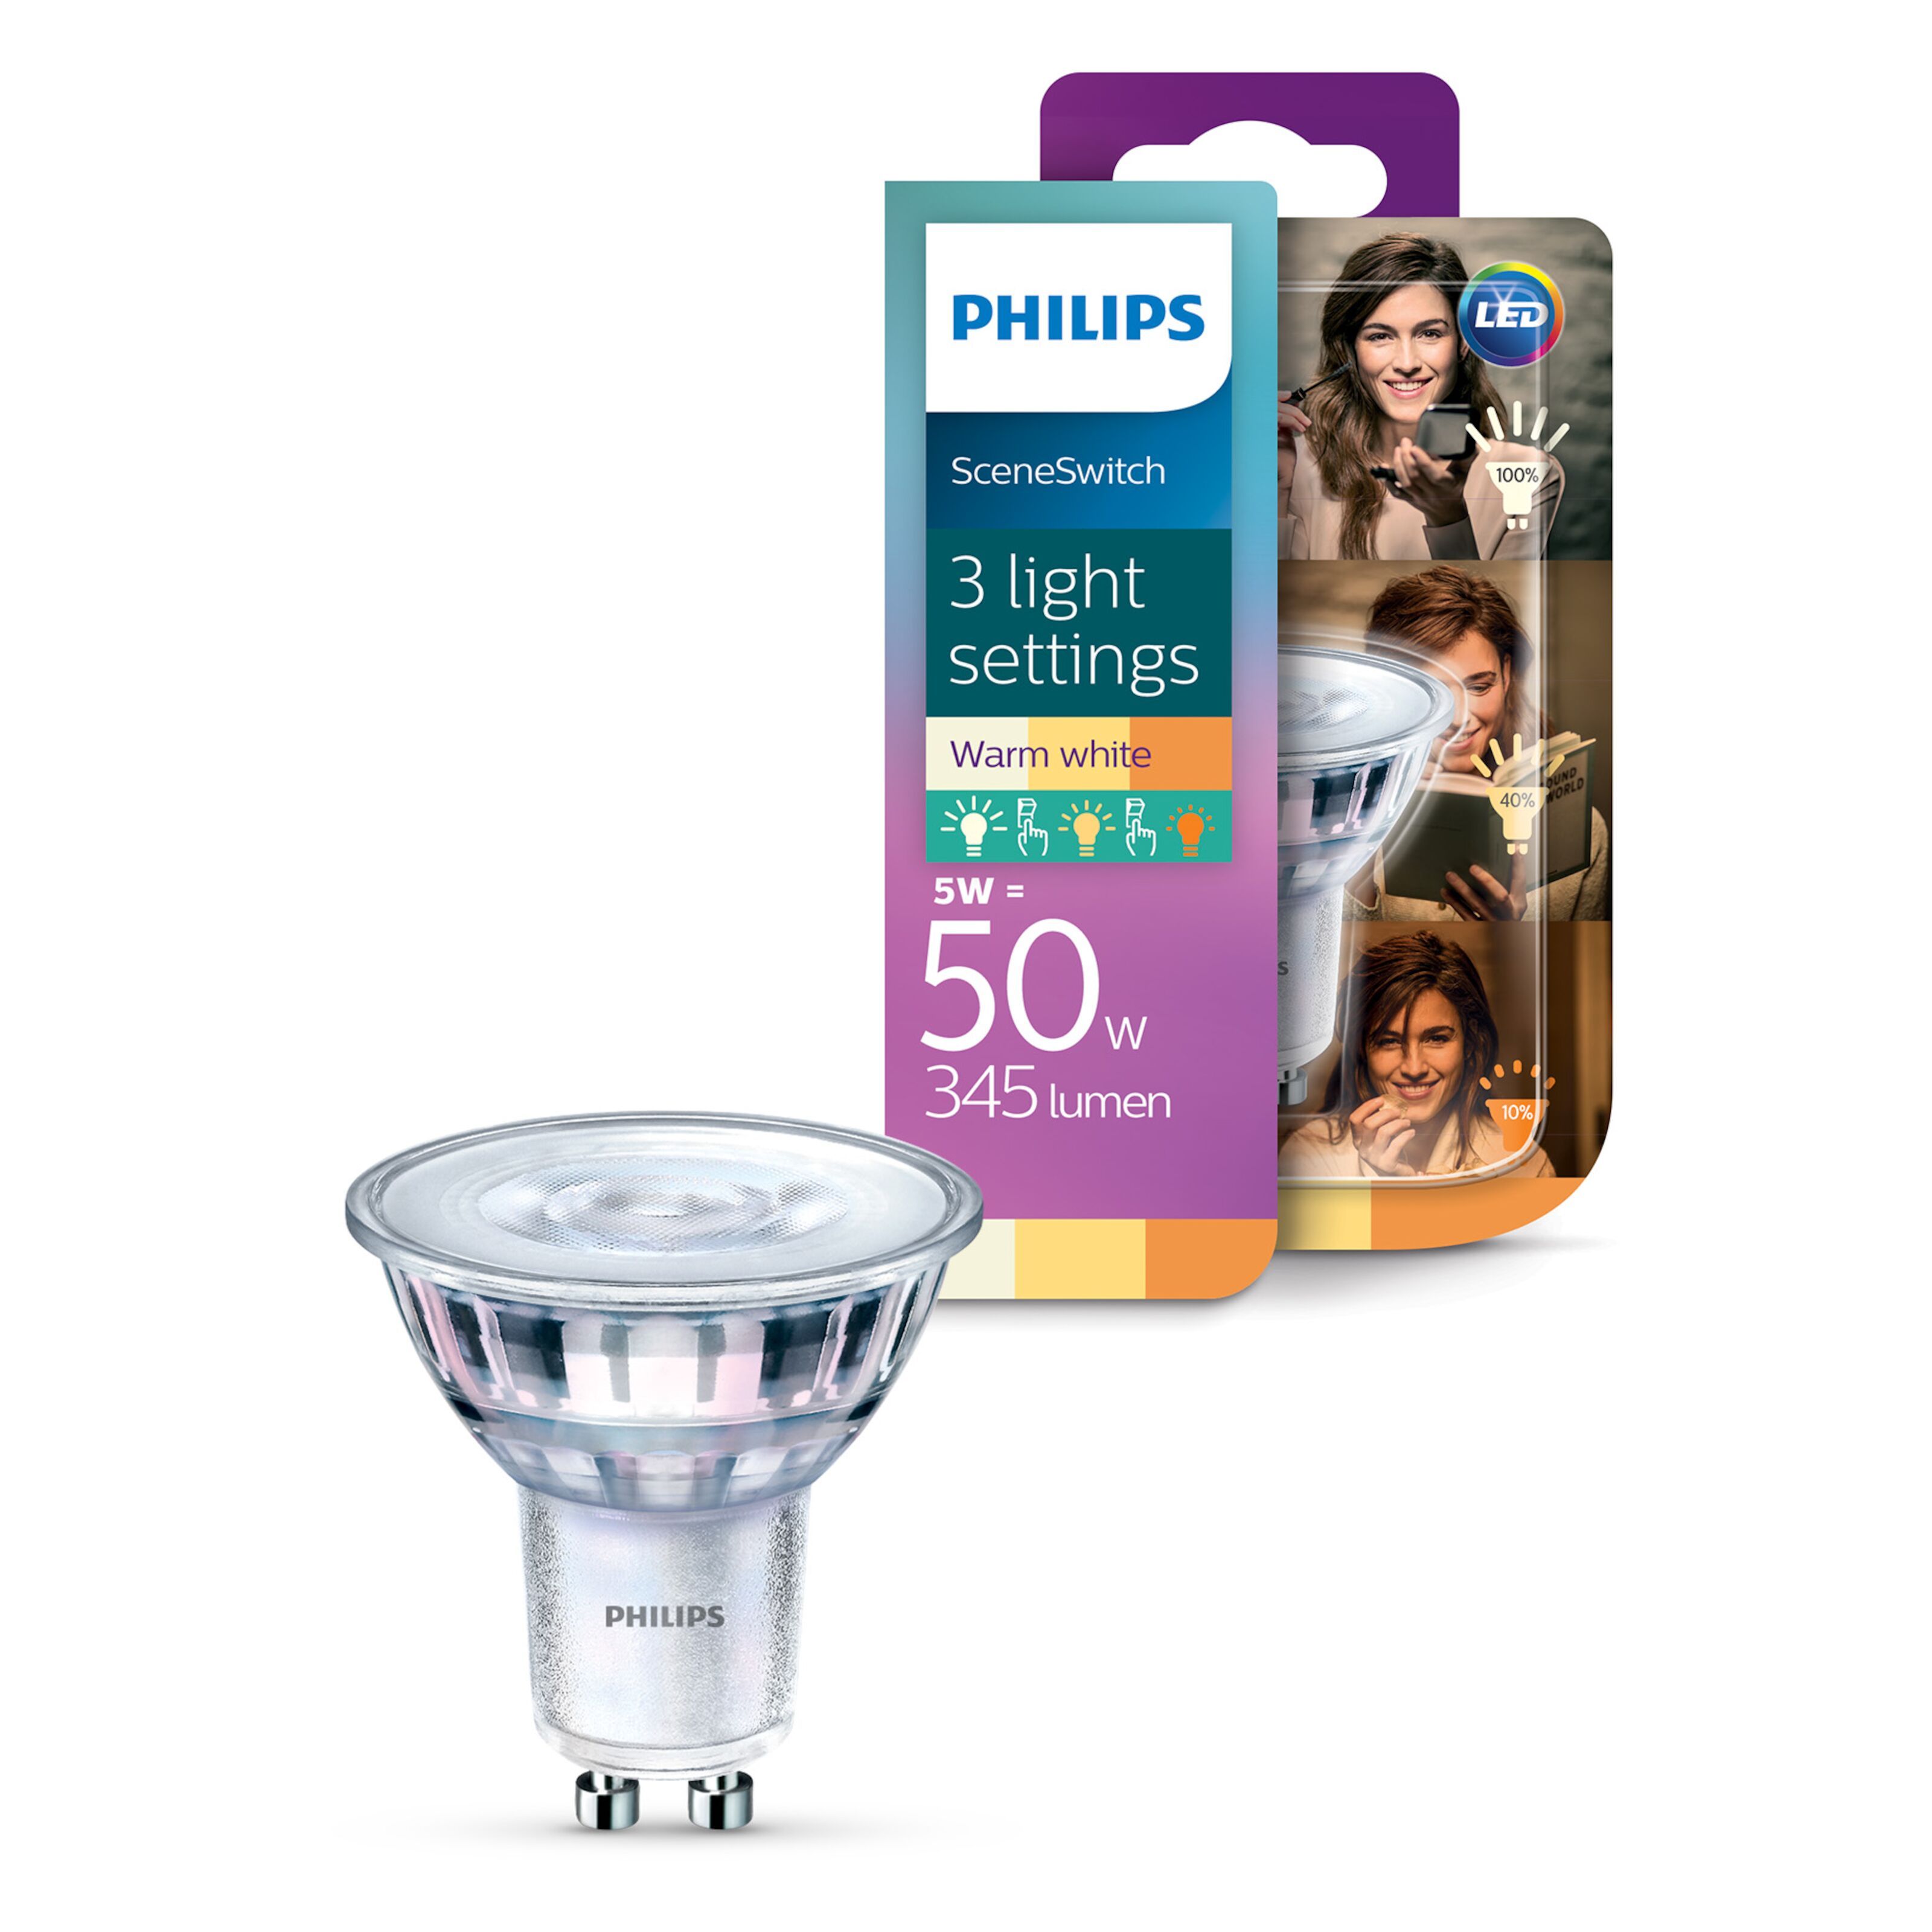 Philips GU10 LED Strahler SceneSwitch Ambientebeleuchtung 3-Stufen